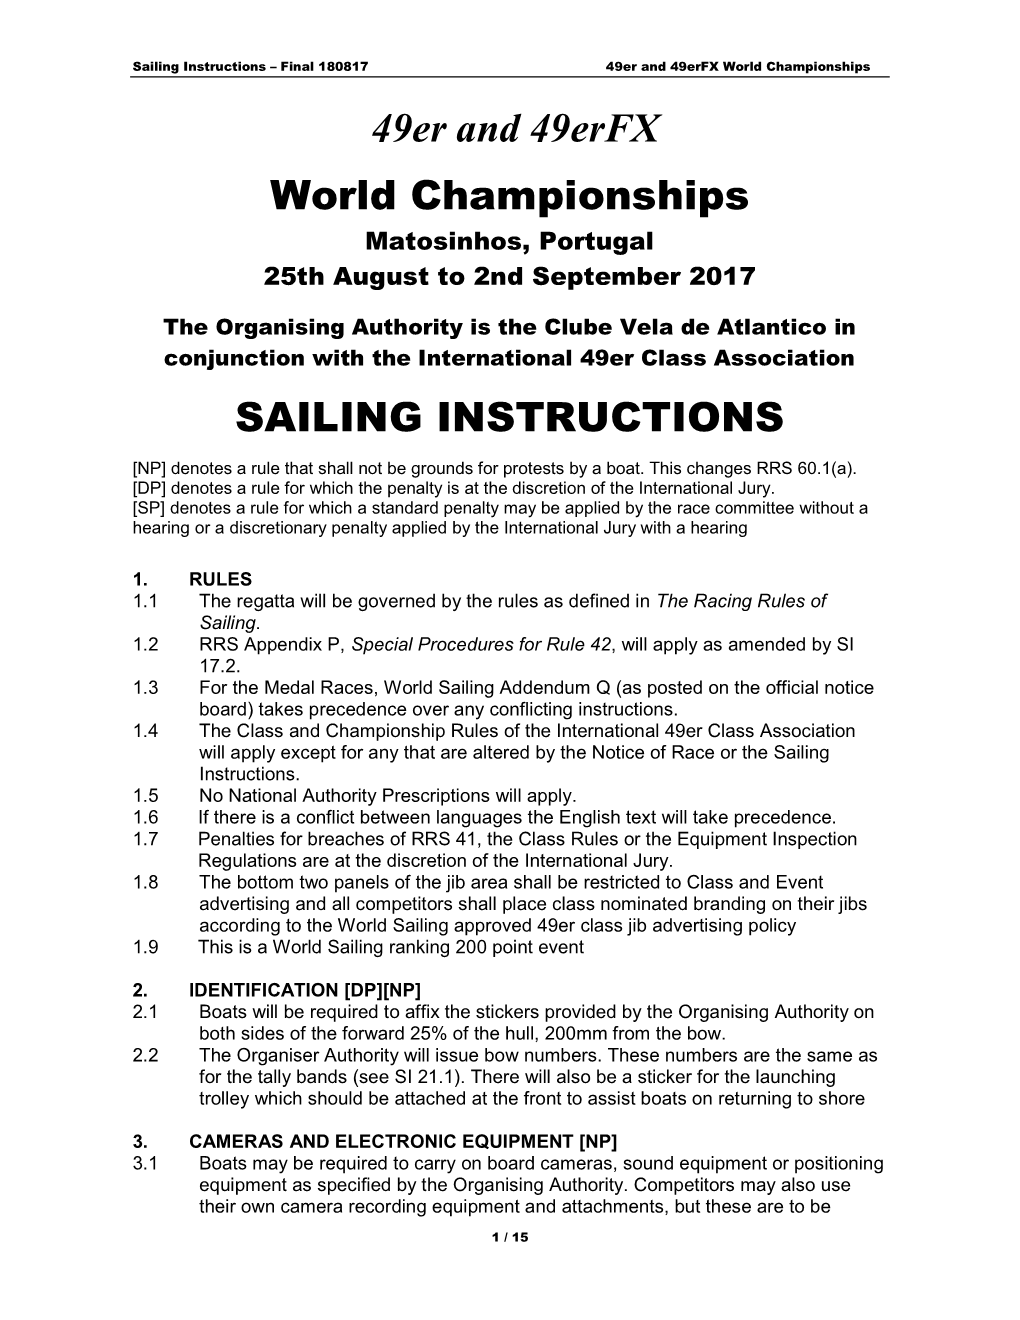 49Er and 49Erfx World Championships SAILING